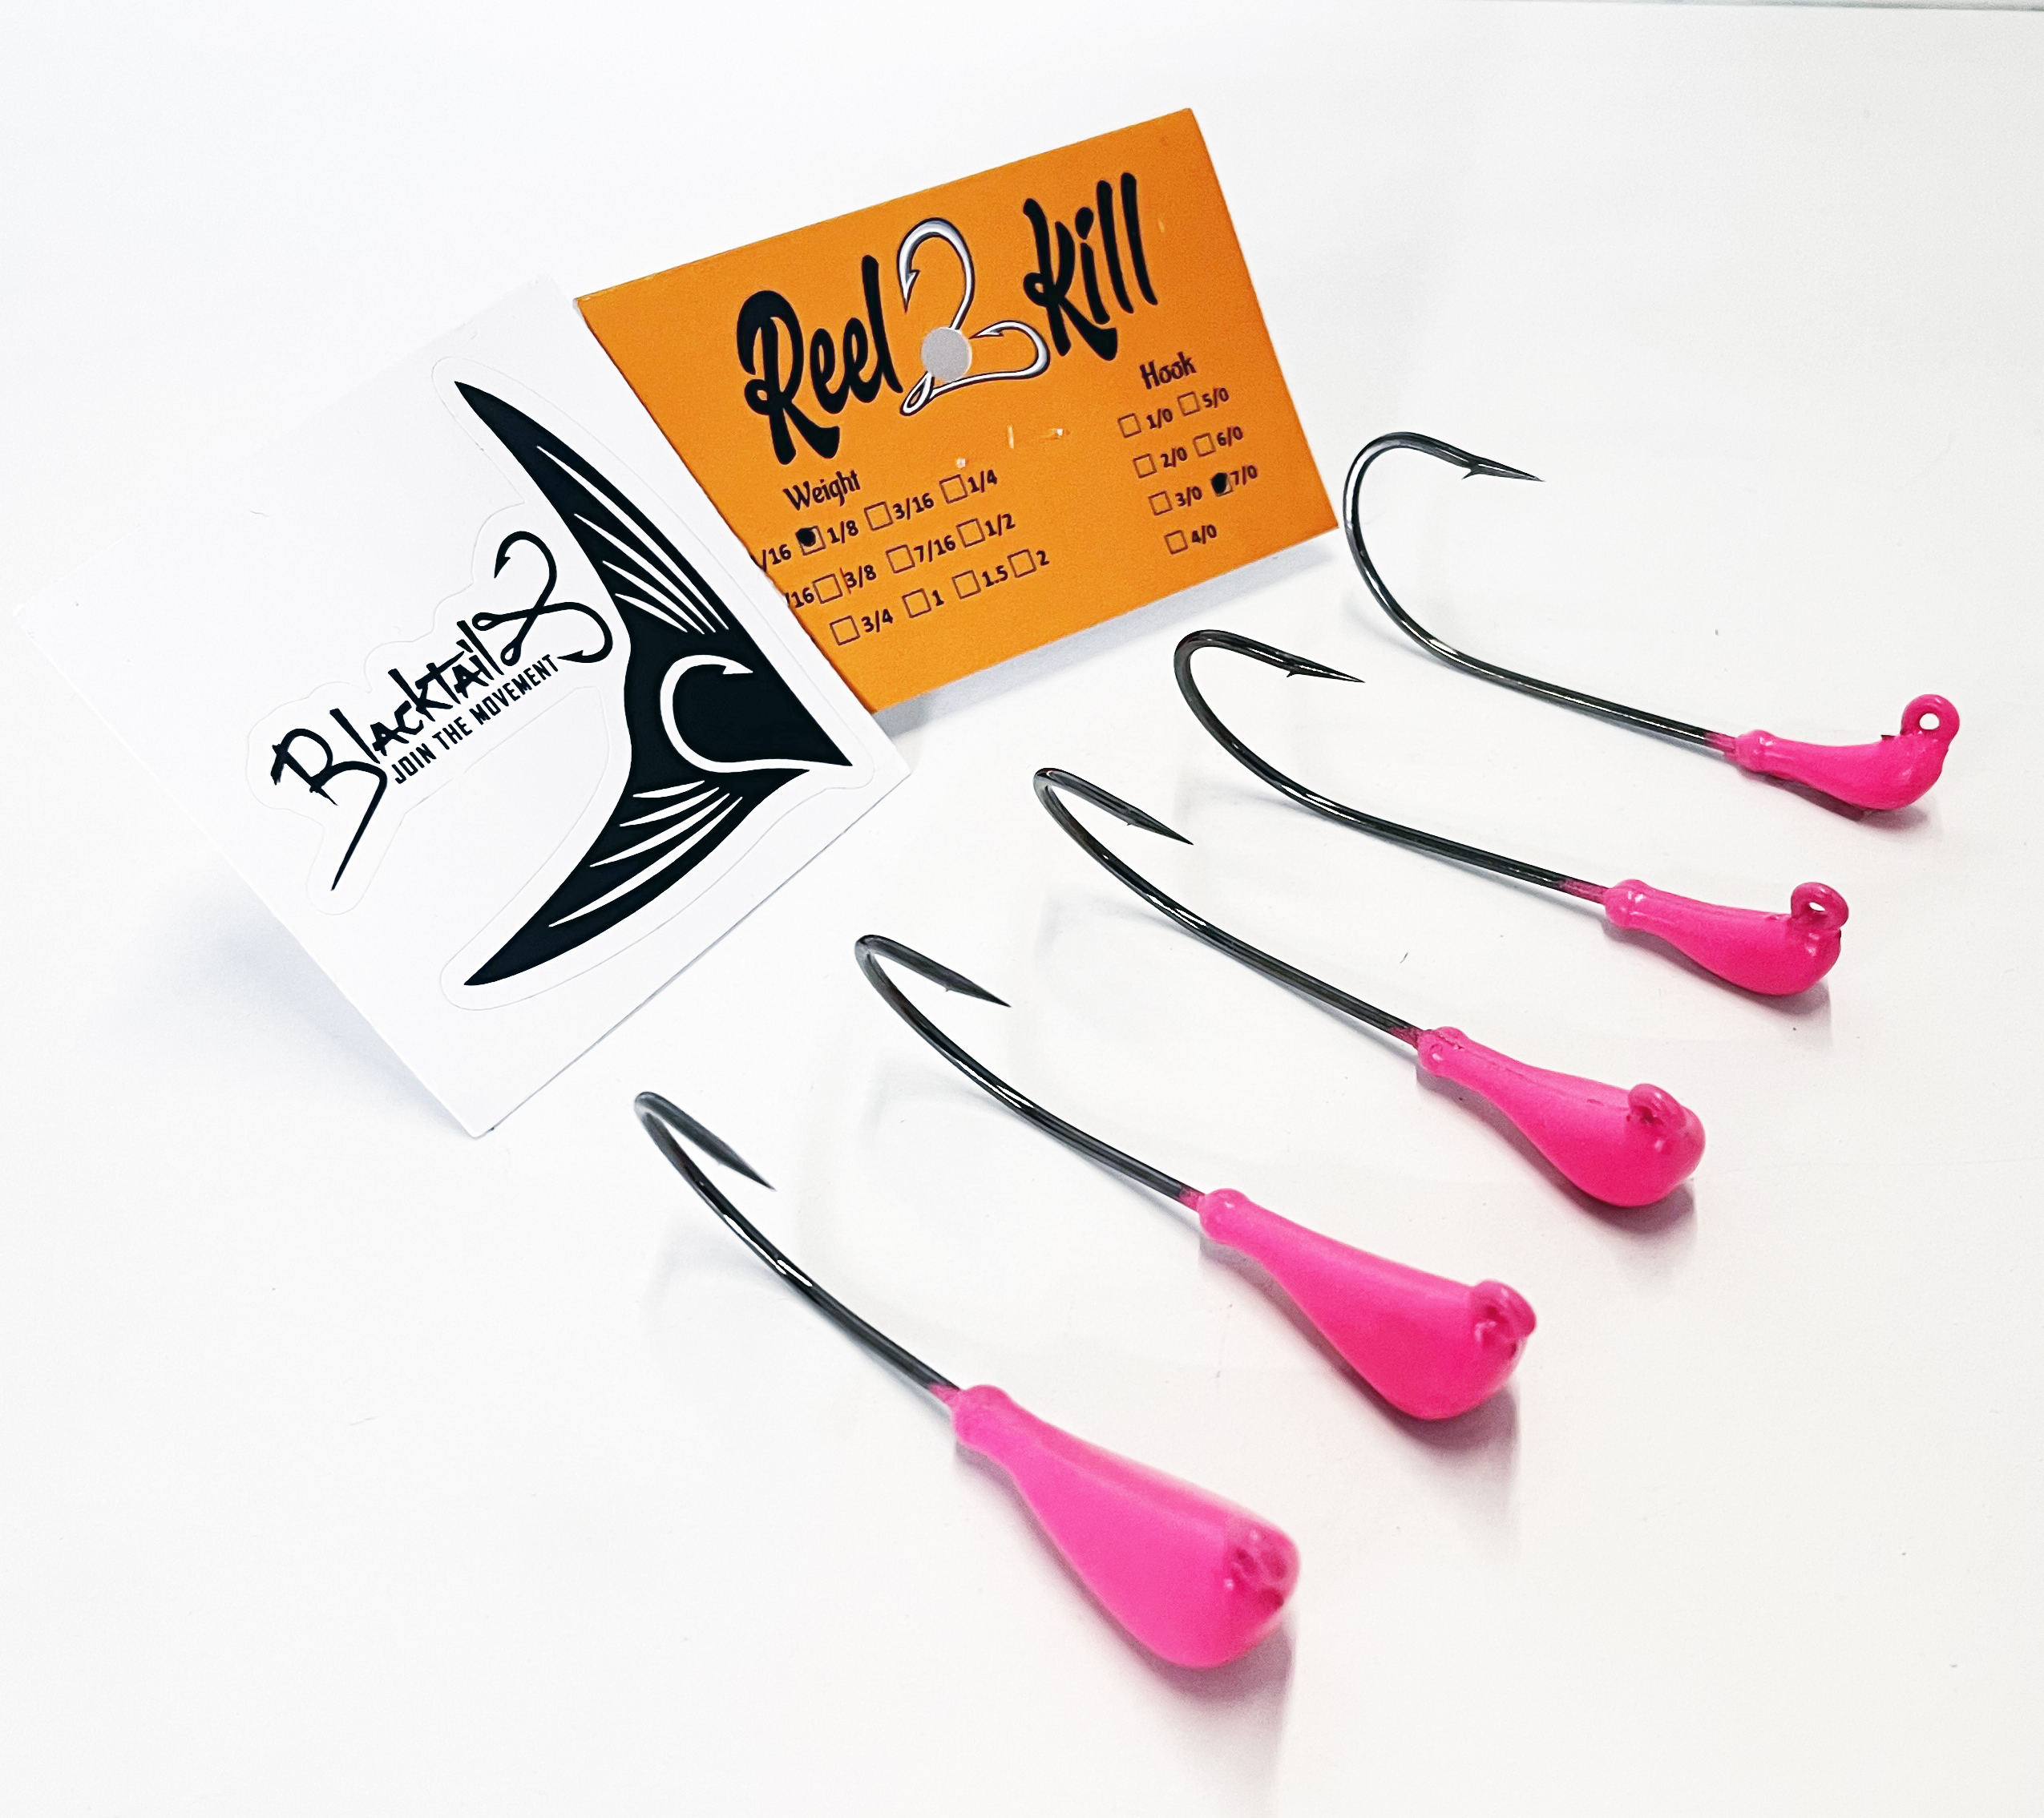 Reel2Kill] Glow Banana Head(Pink & Orange) Made with Blacktail Hooks